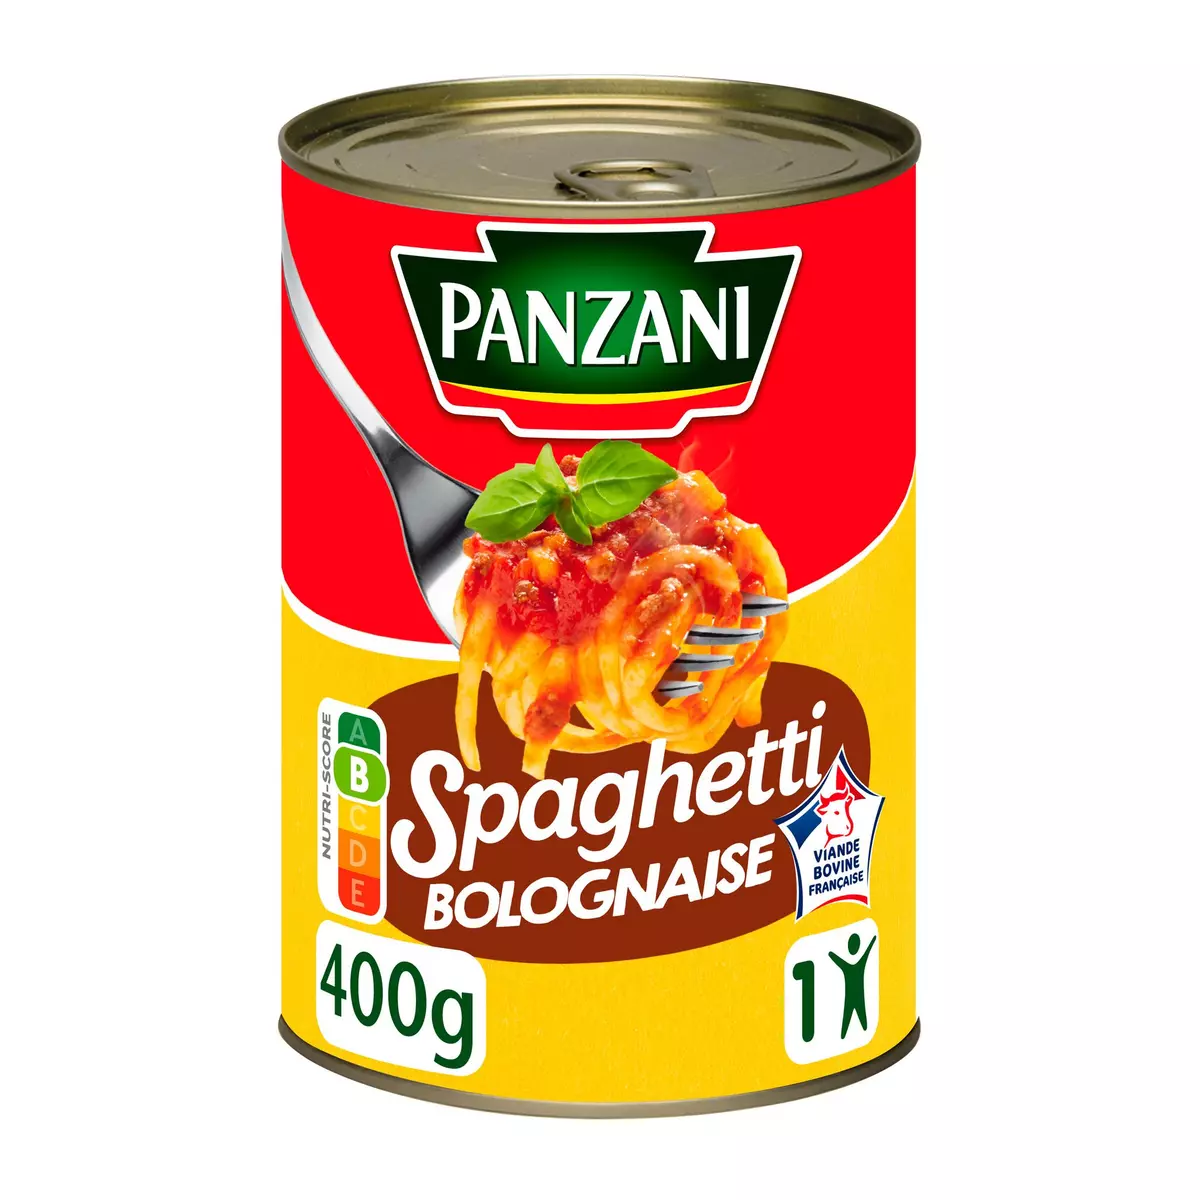 PANZANI Spaghetti bolognaise 1 portion 400g